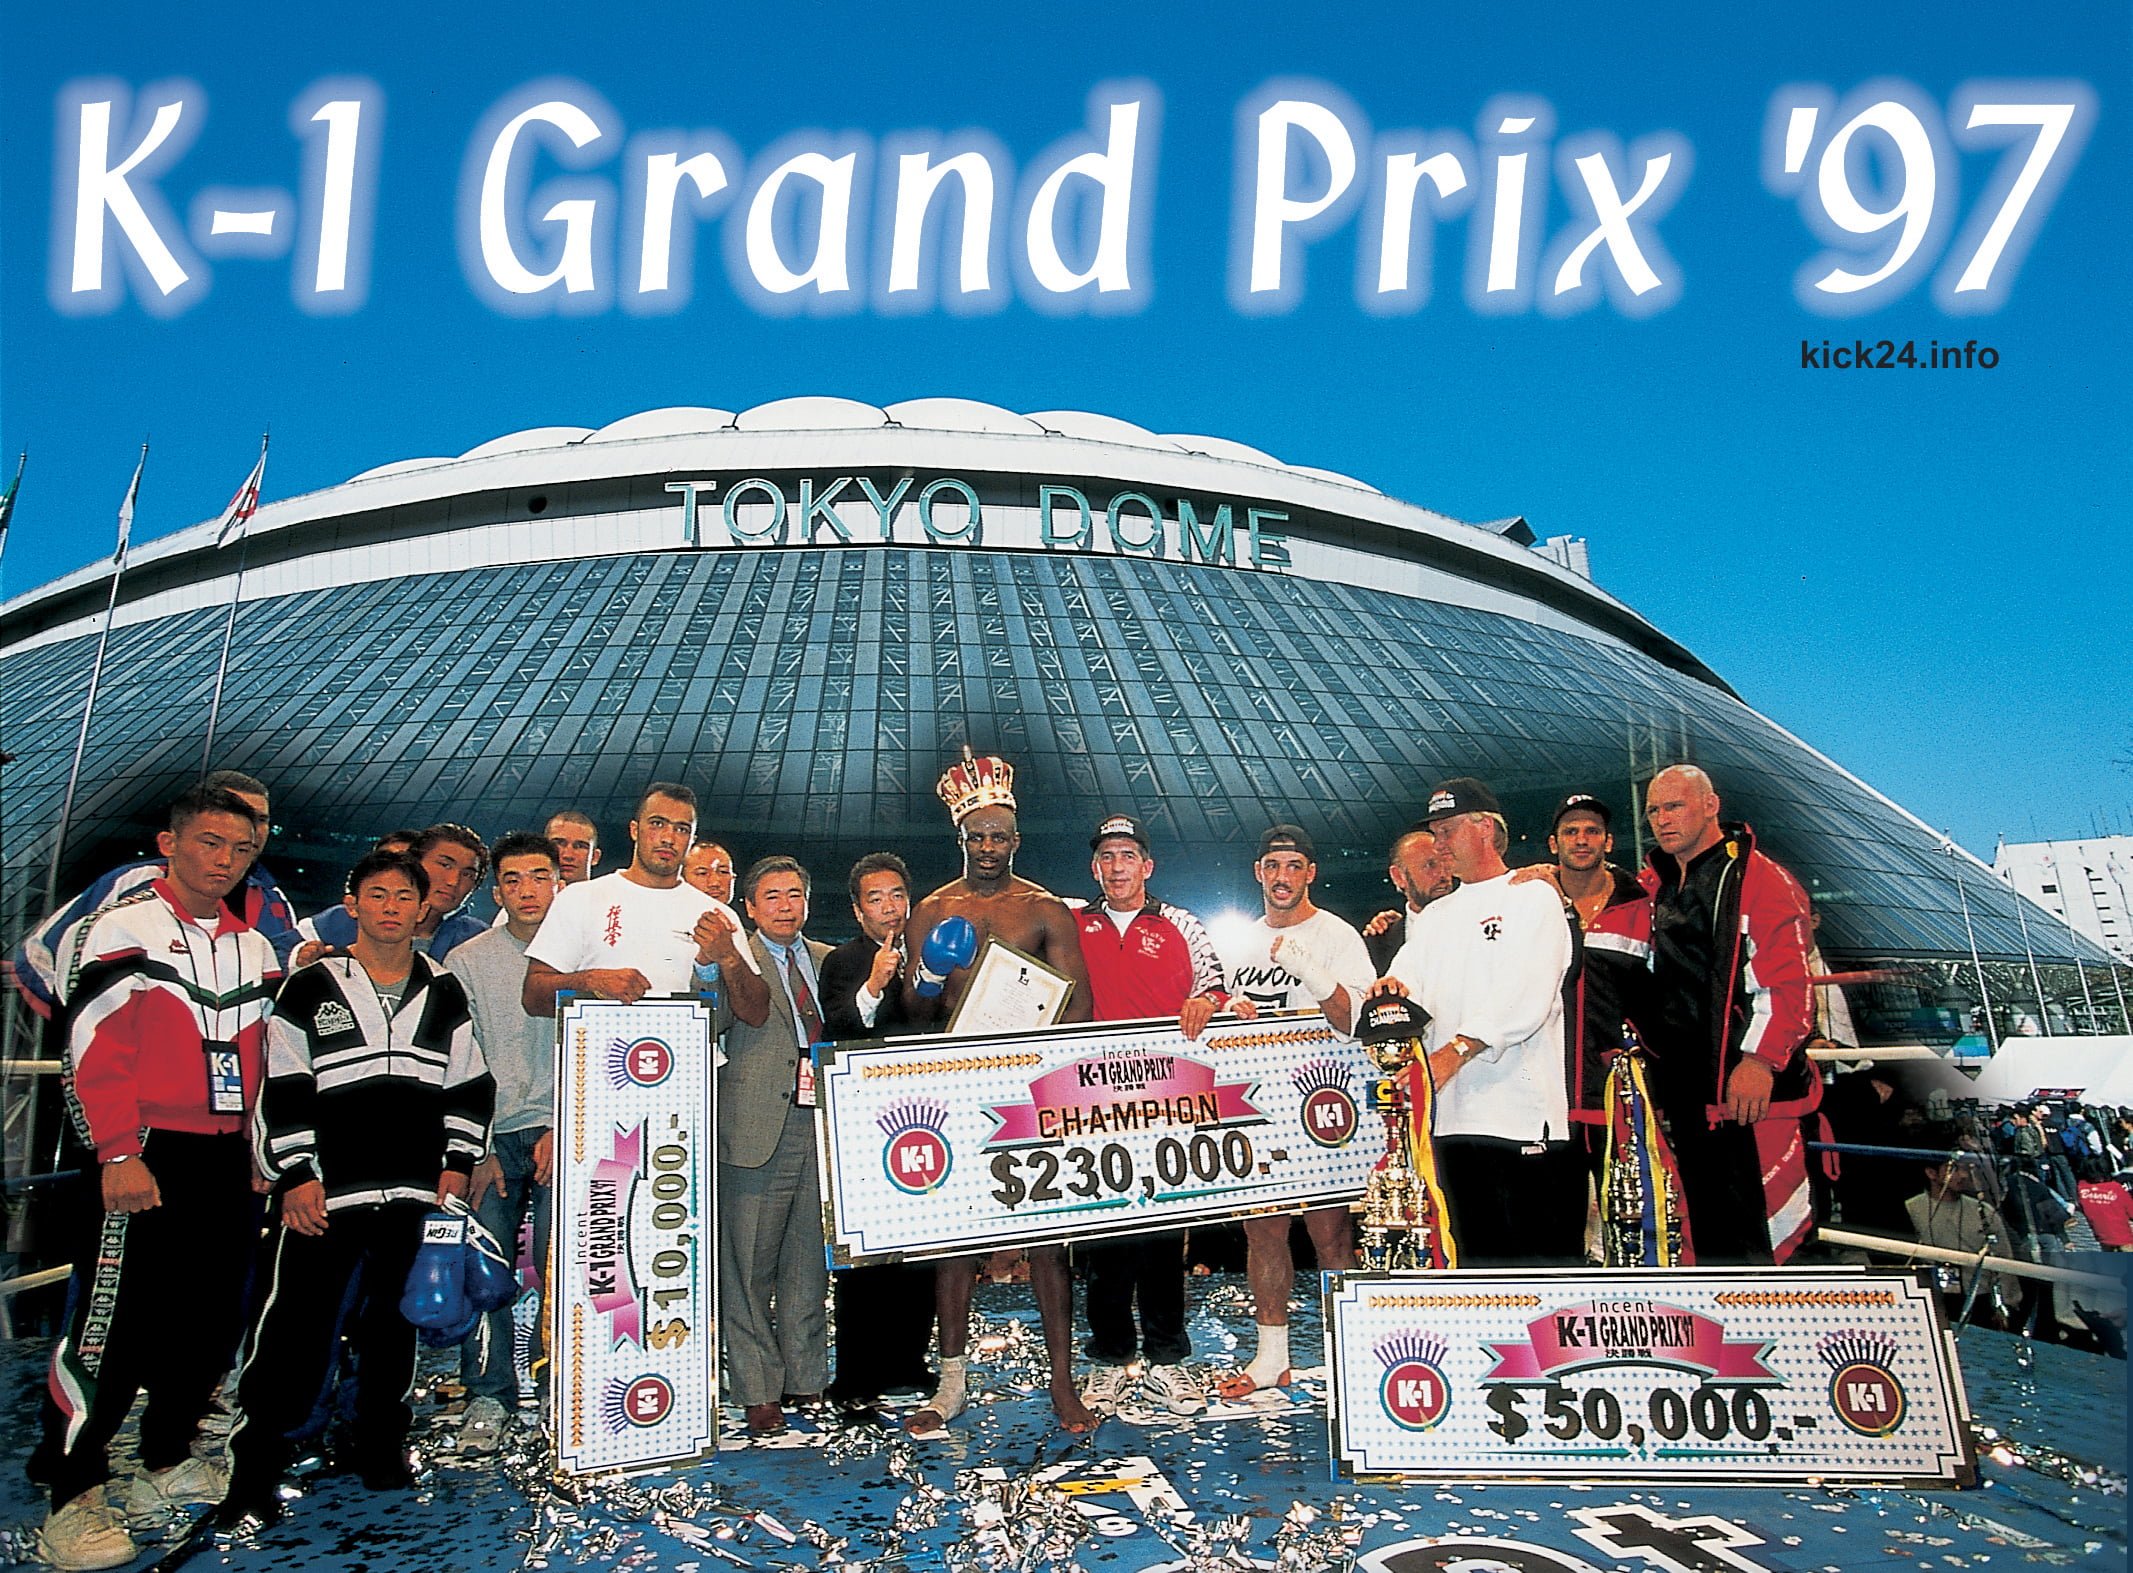 K-Grand Prix 1997